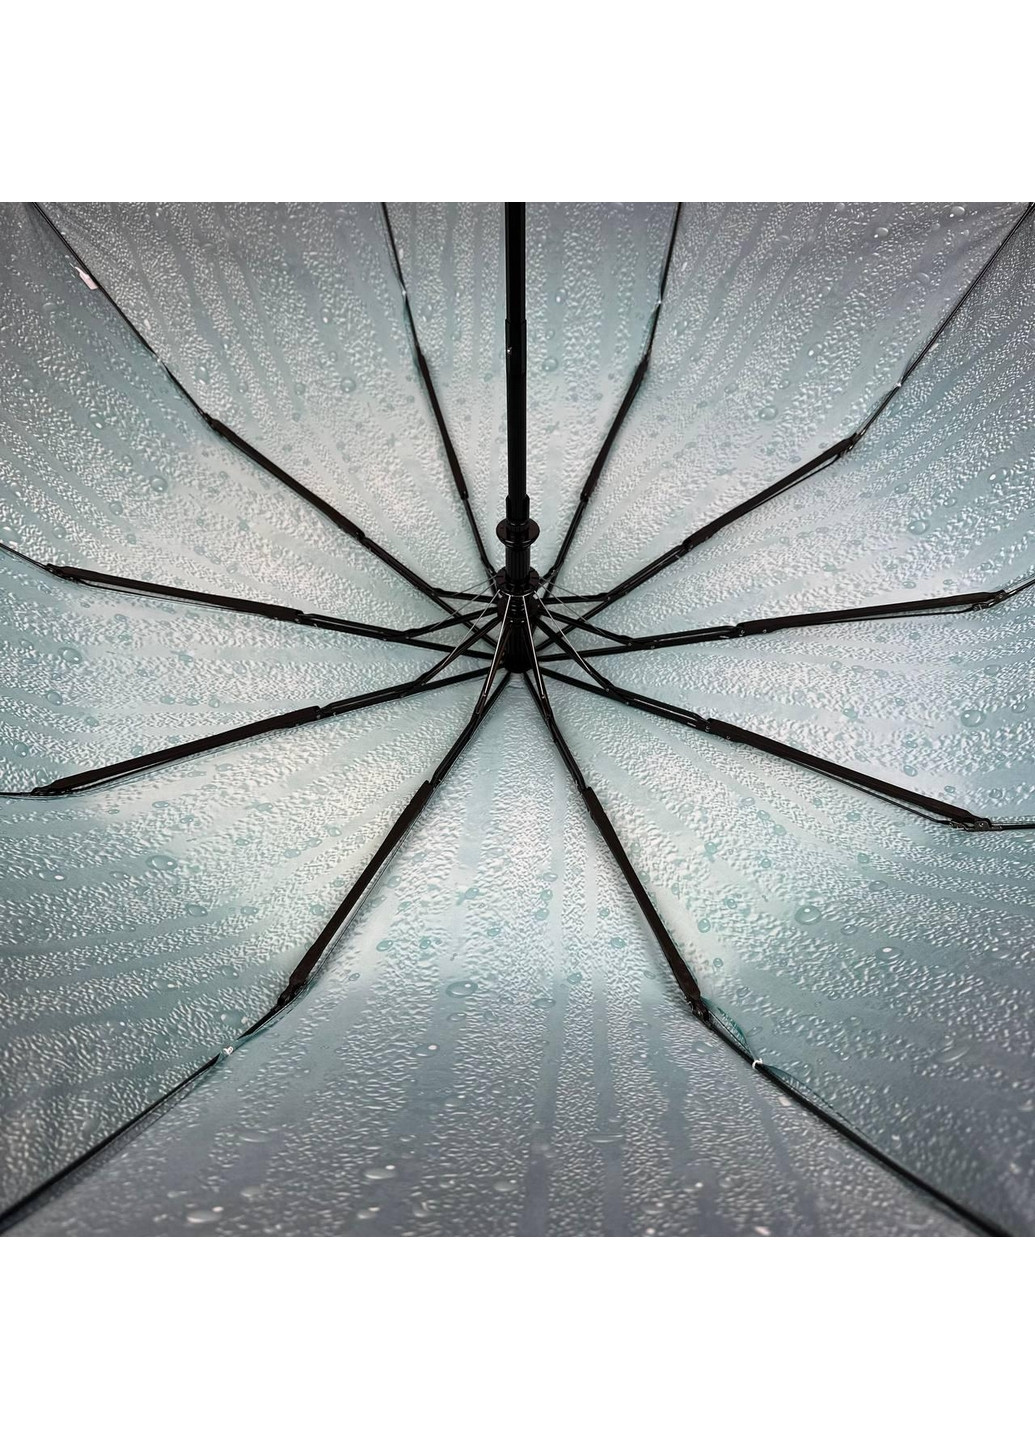 Женский зонт полуавтомат Bellissima (276392048)